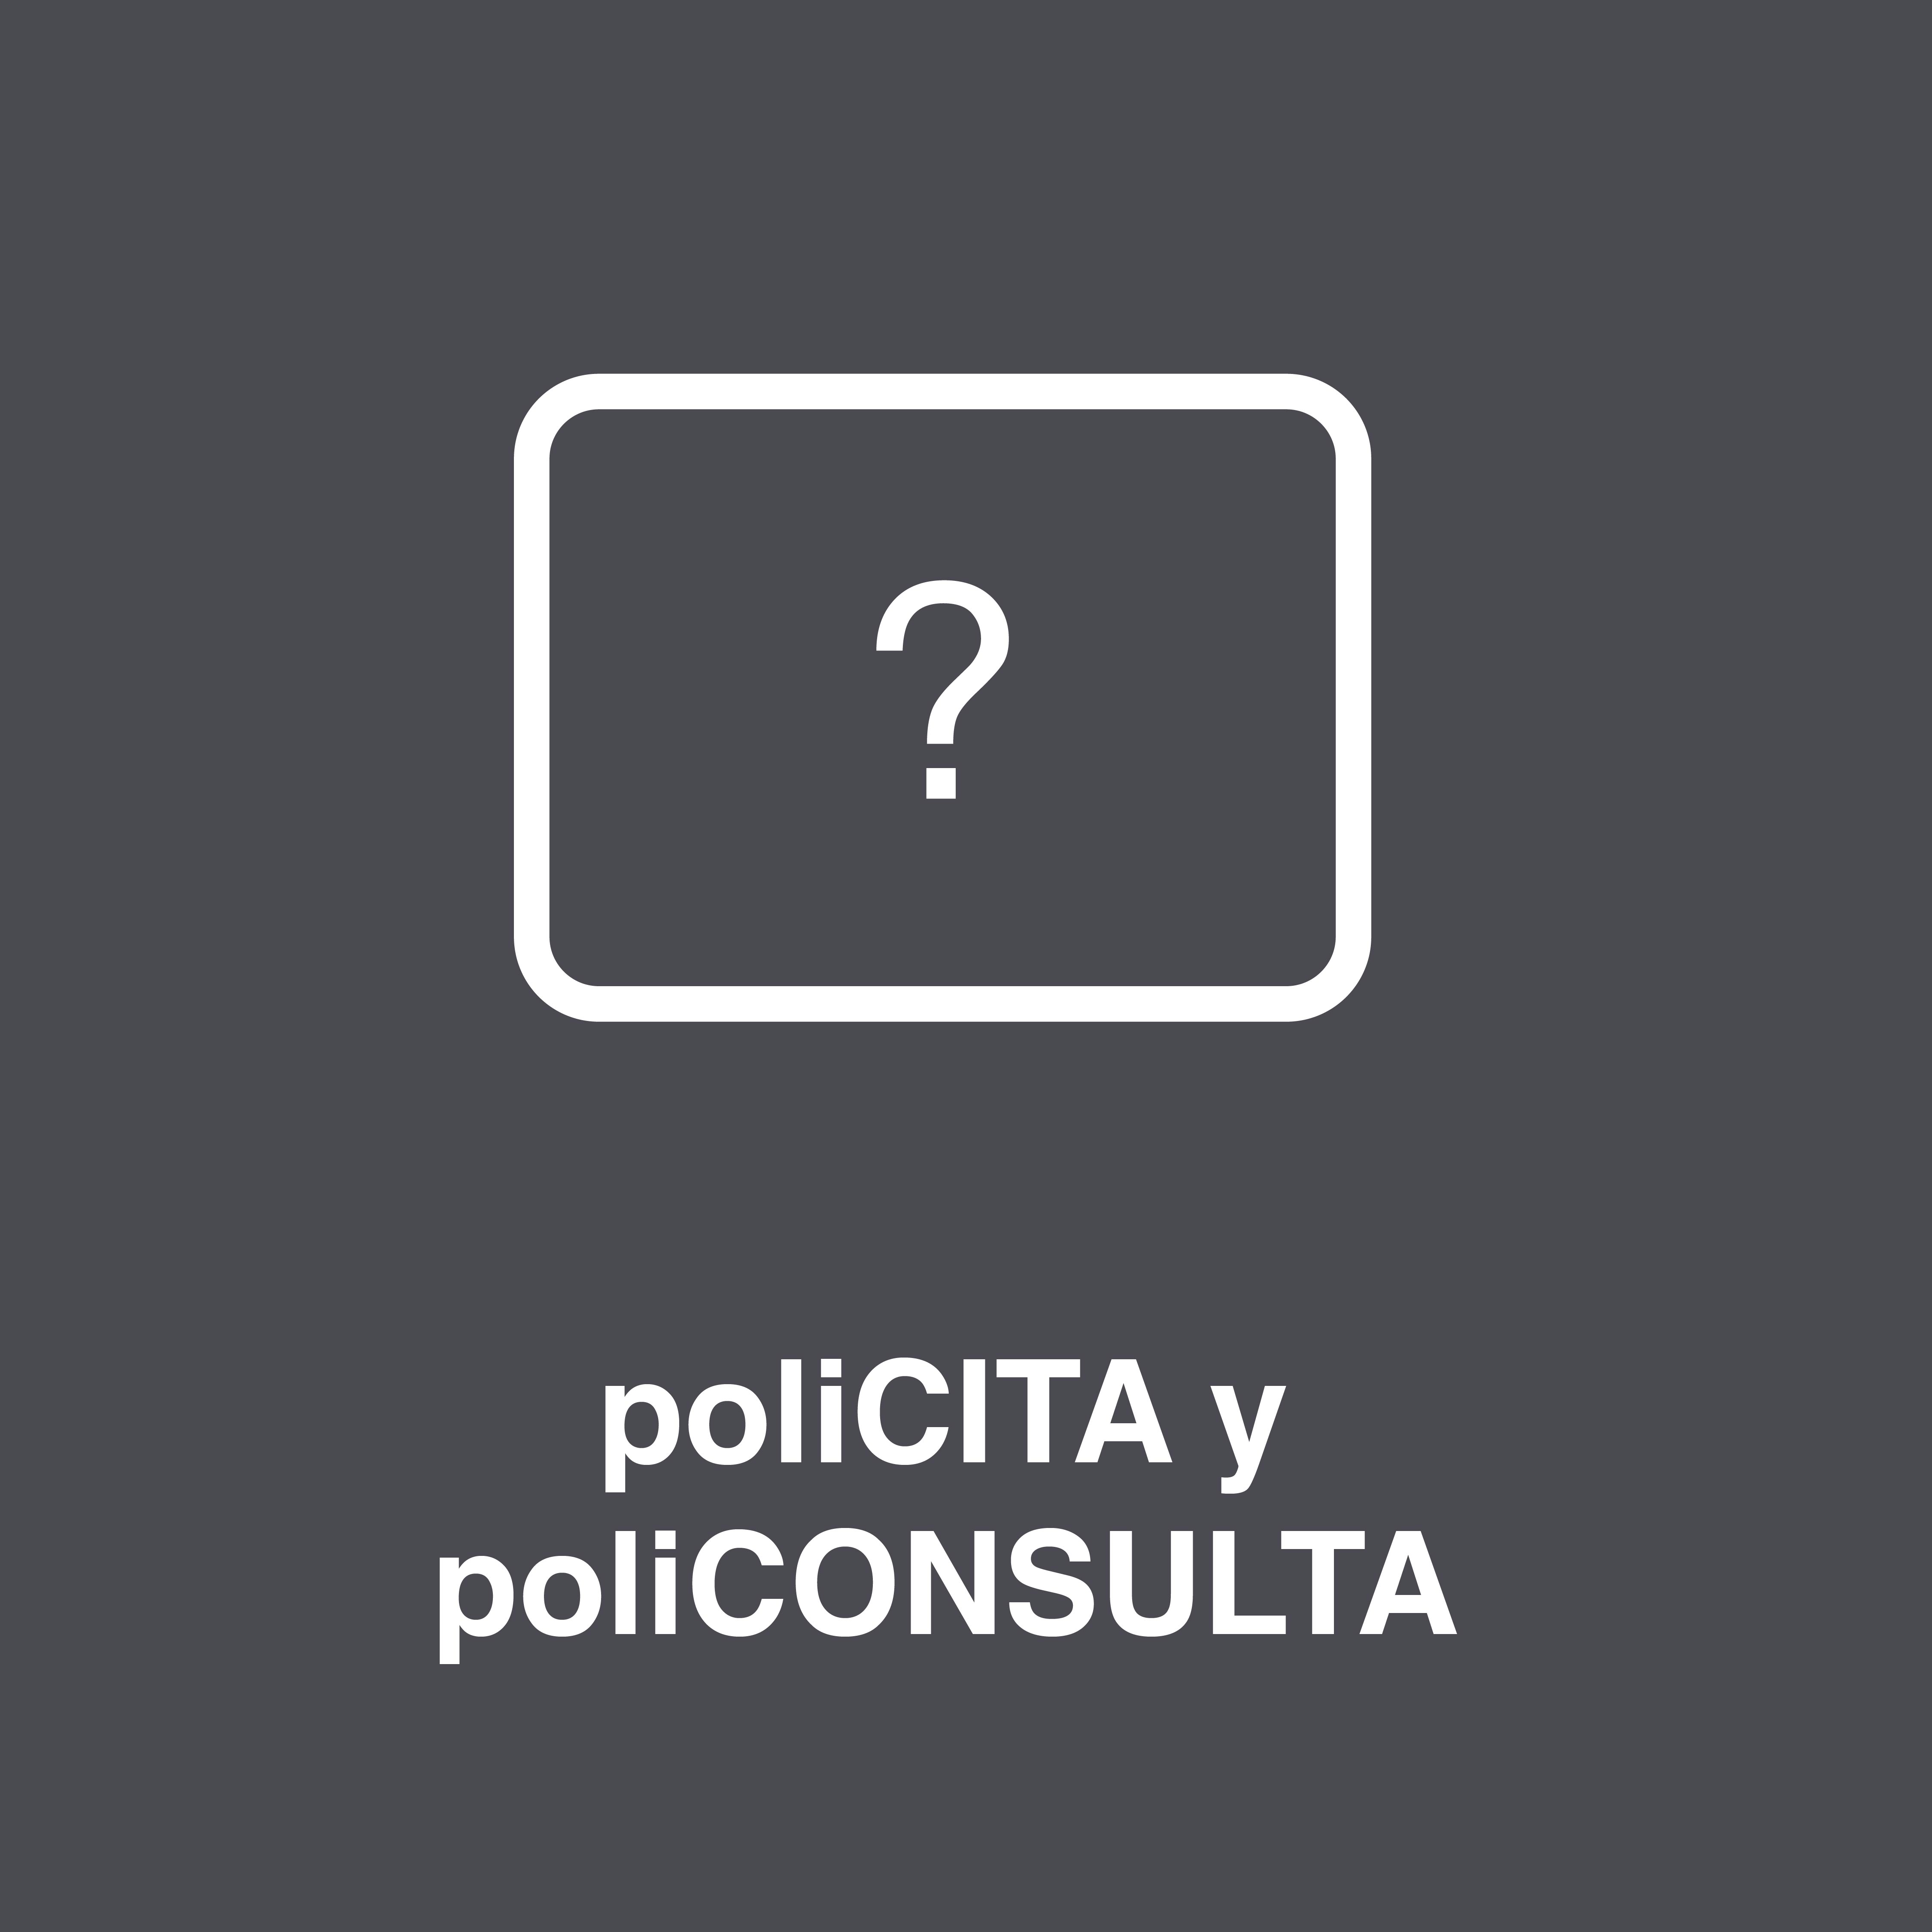 PoliConsulta | PoliCita